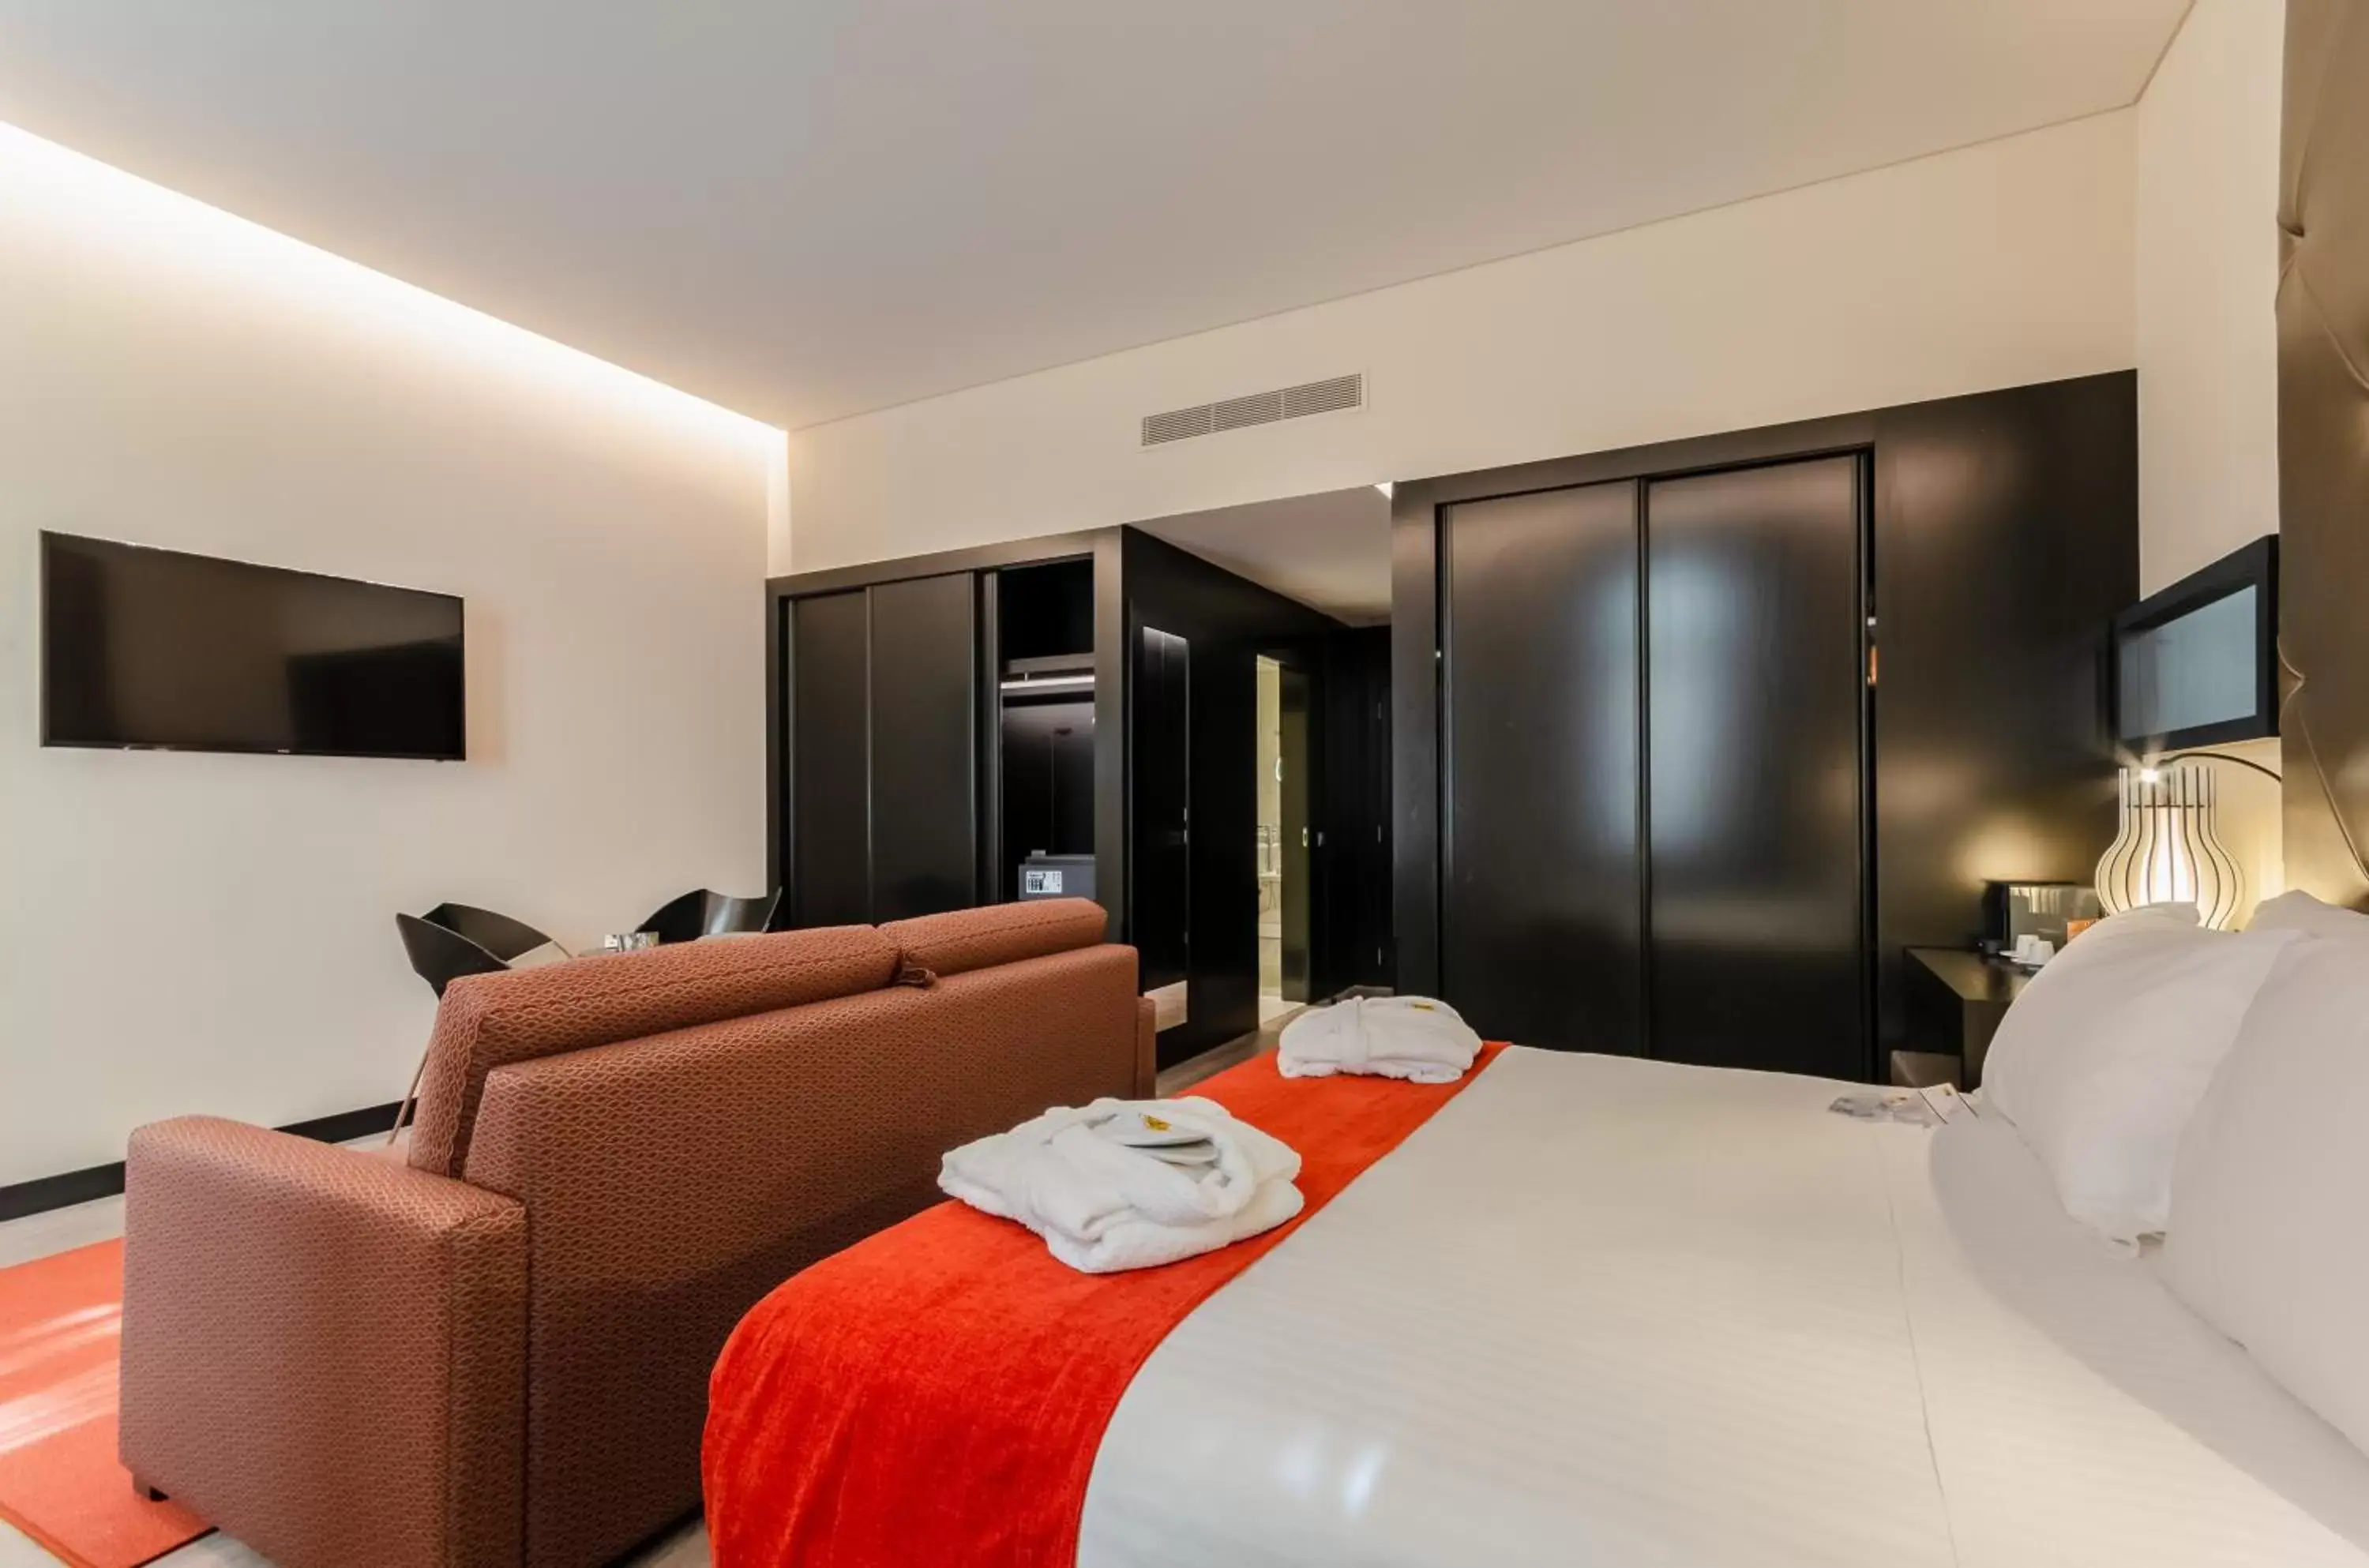 Bedroom in Hotel Santa Justa